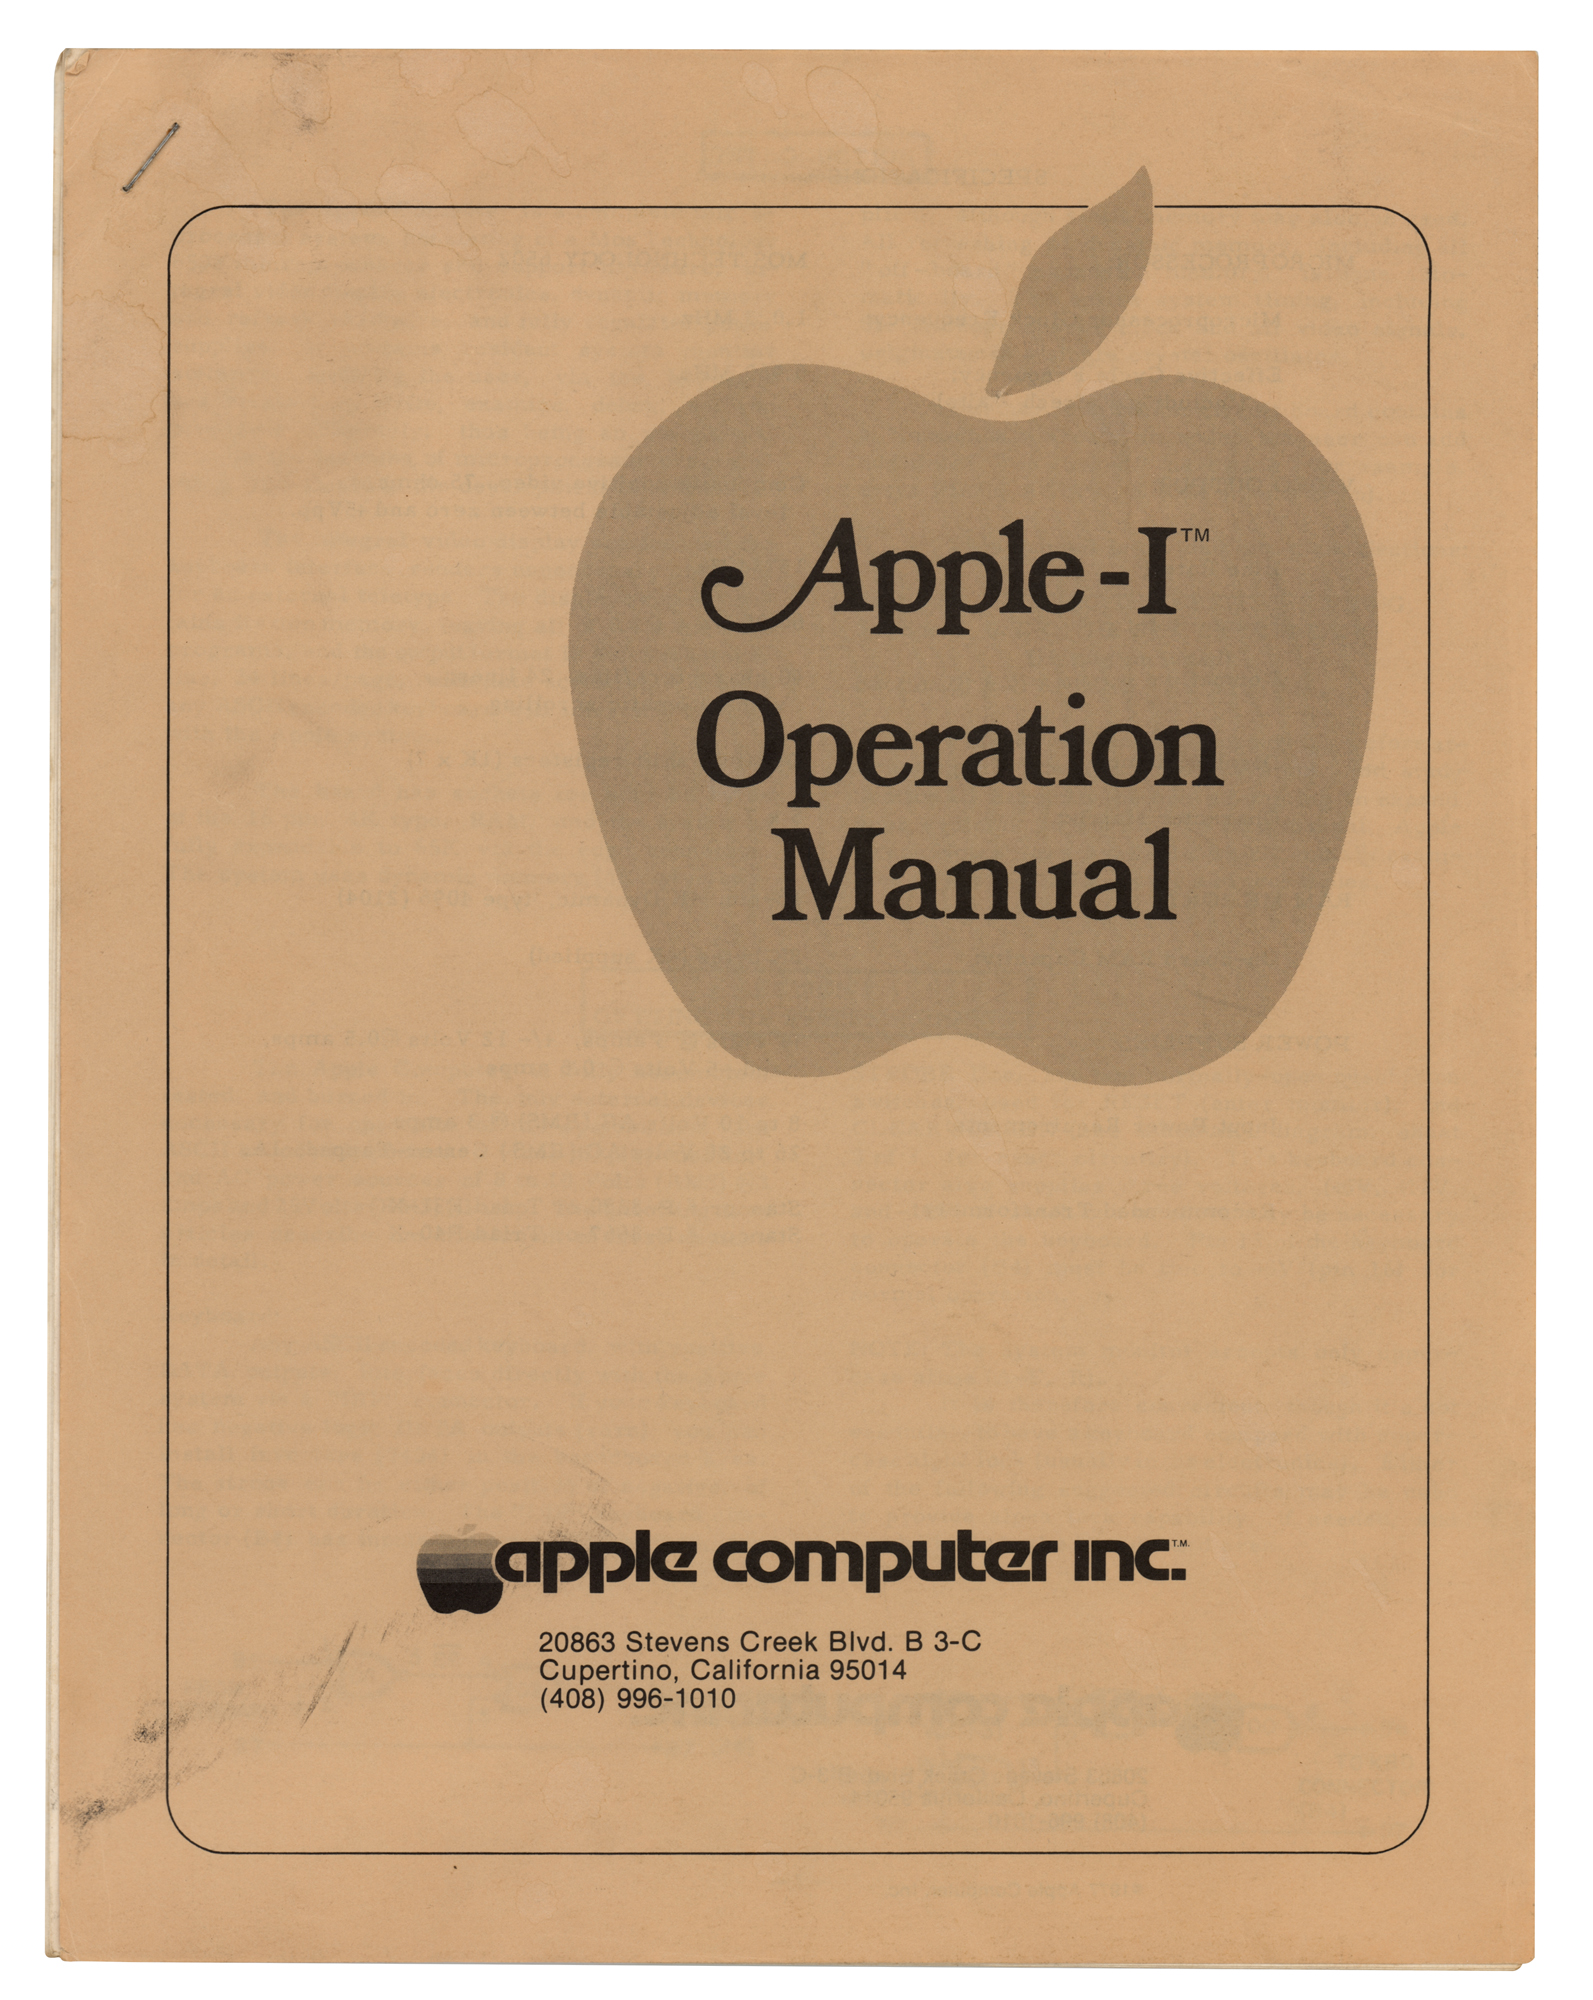 Lot #8005 Apple-1 Computer Signed by Steve Wozniak - Image 24